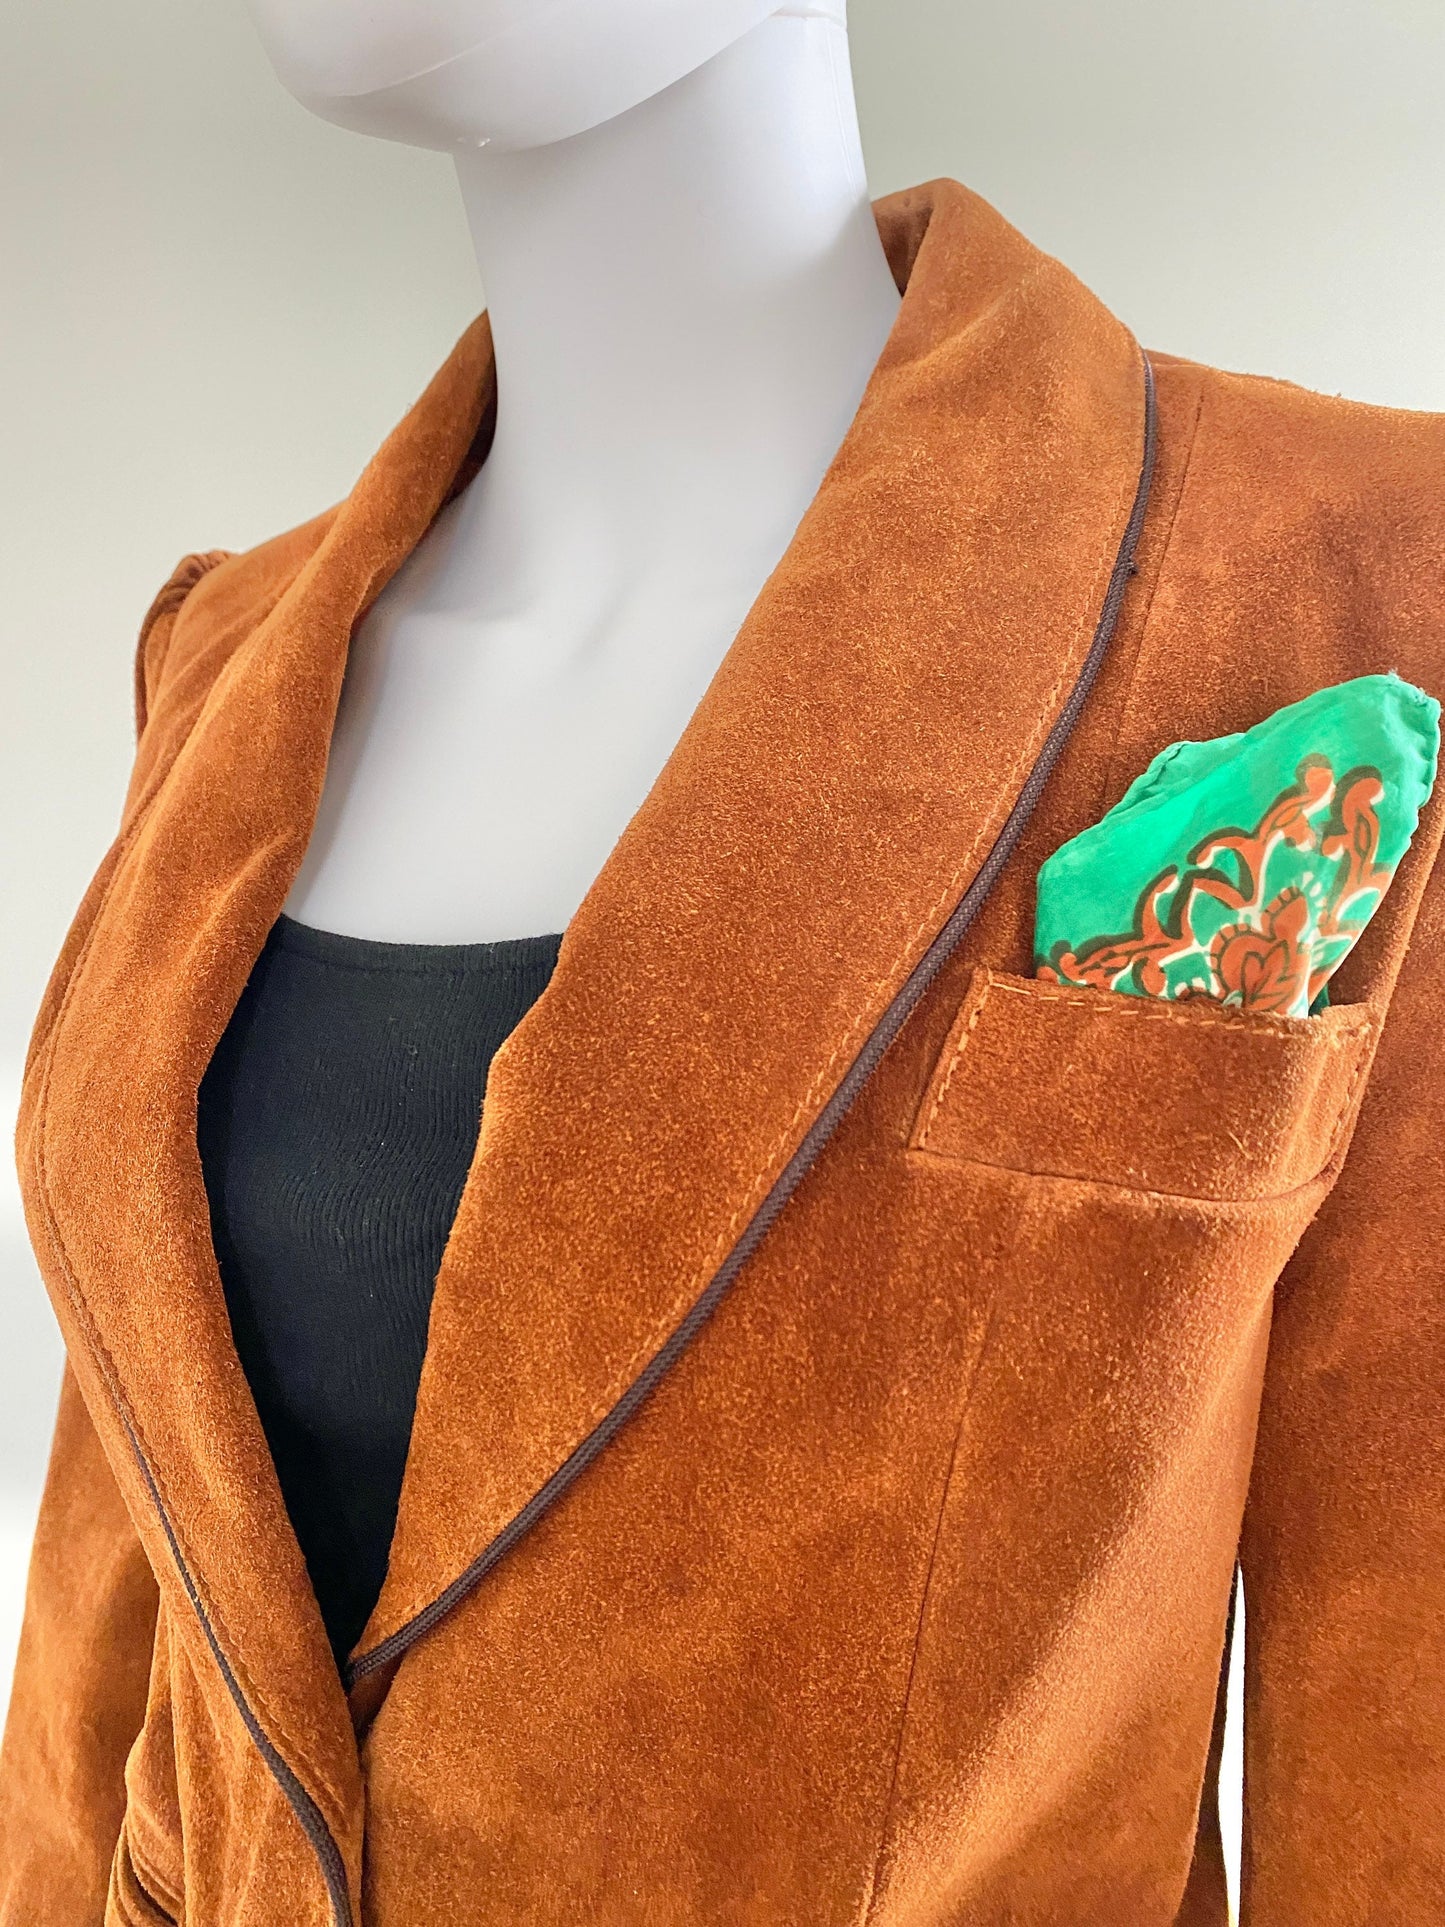 Vintage 1970s Suede Blazer / 70s leather blazer / 1970s leather jacket/ Size S M